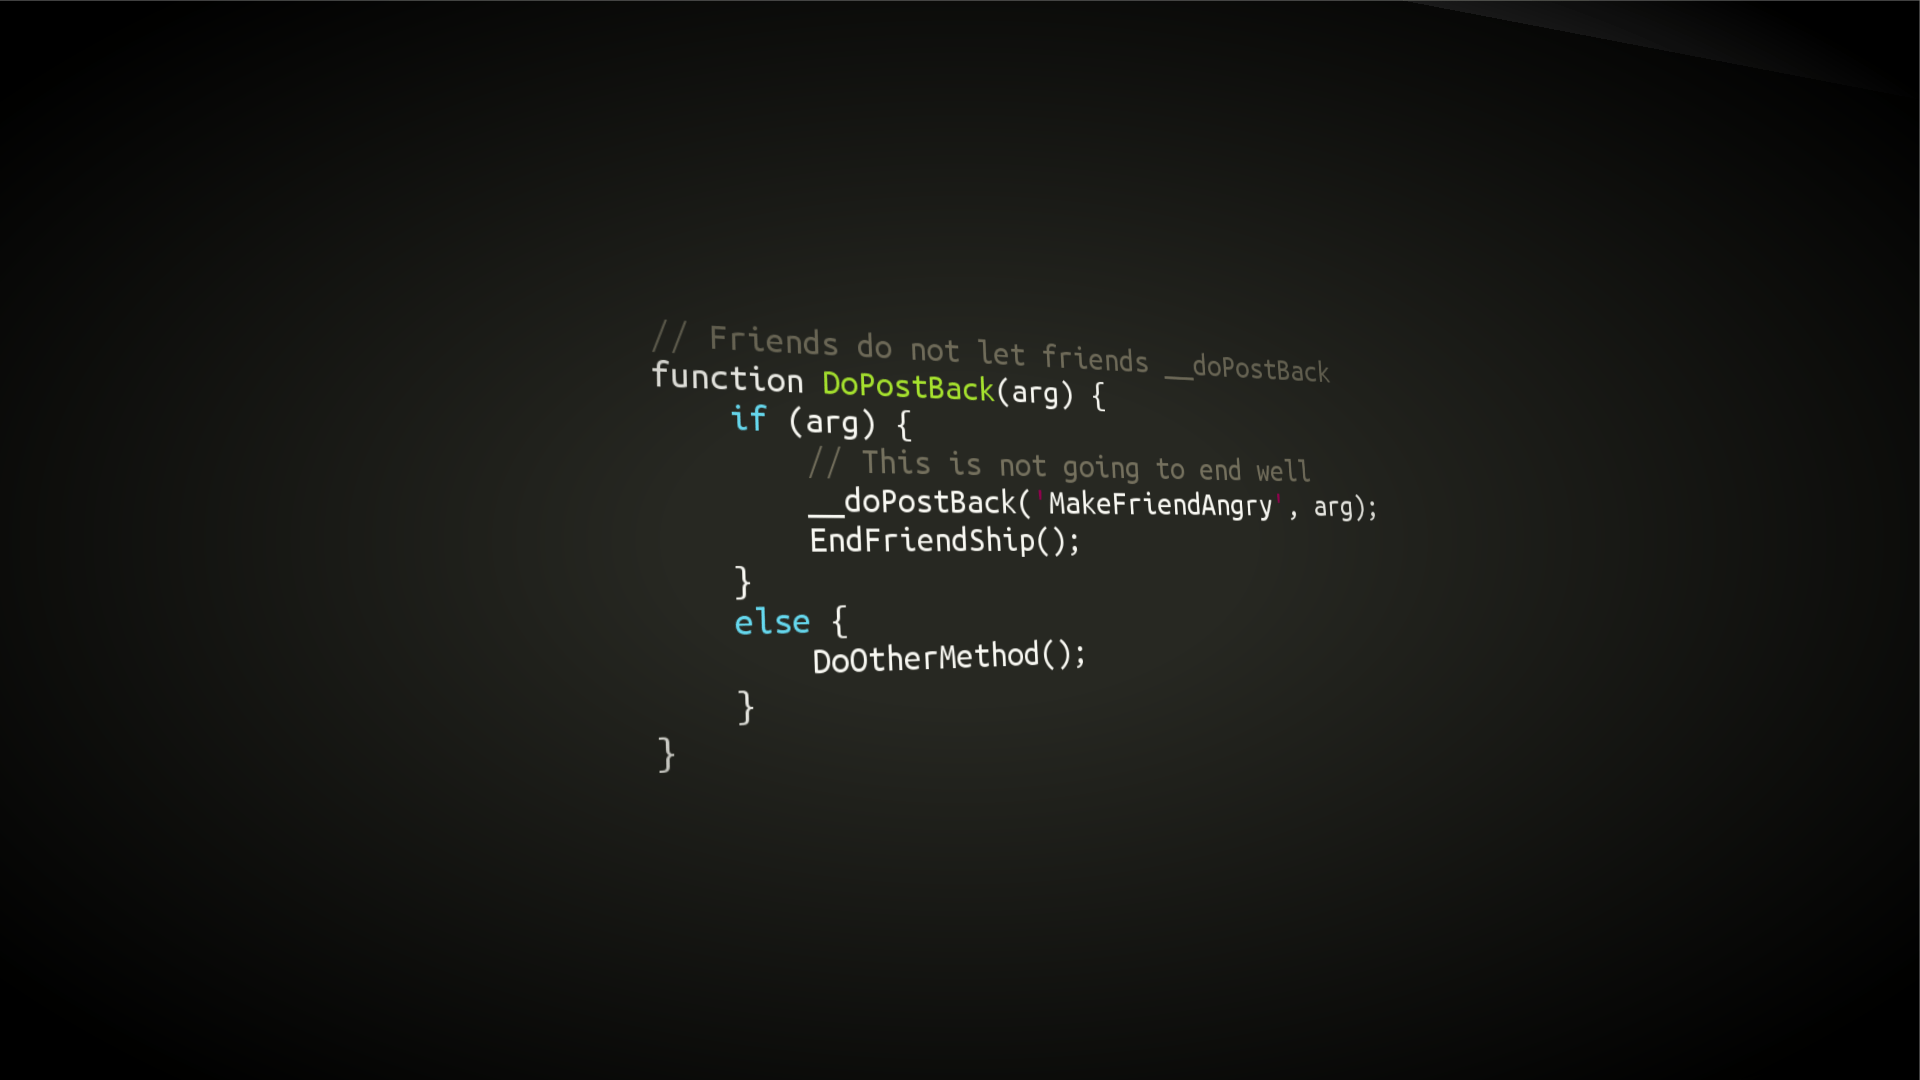 General 1920x1080 programming code minimalism